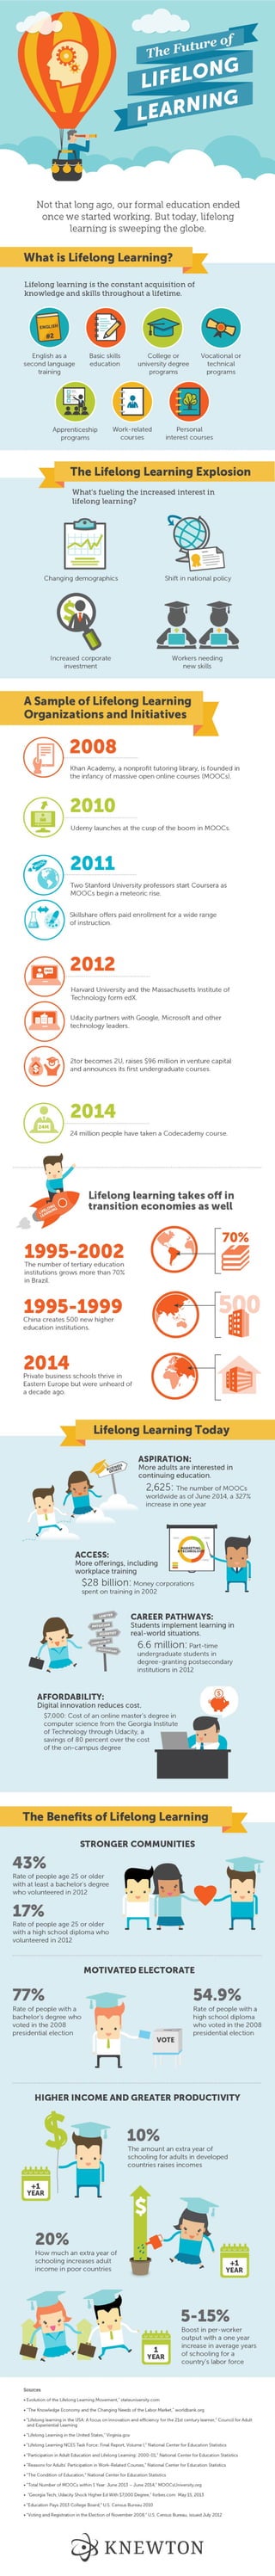 Knewton Lifelong Learning Infographic